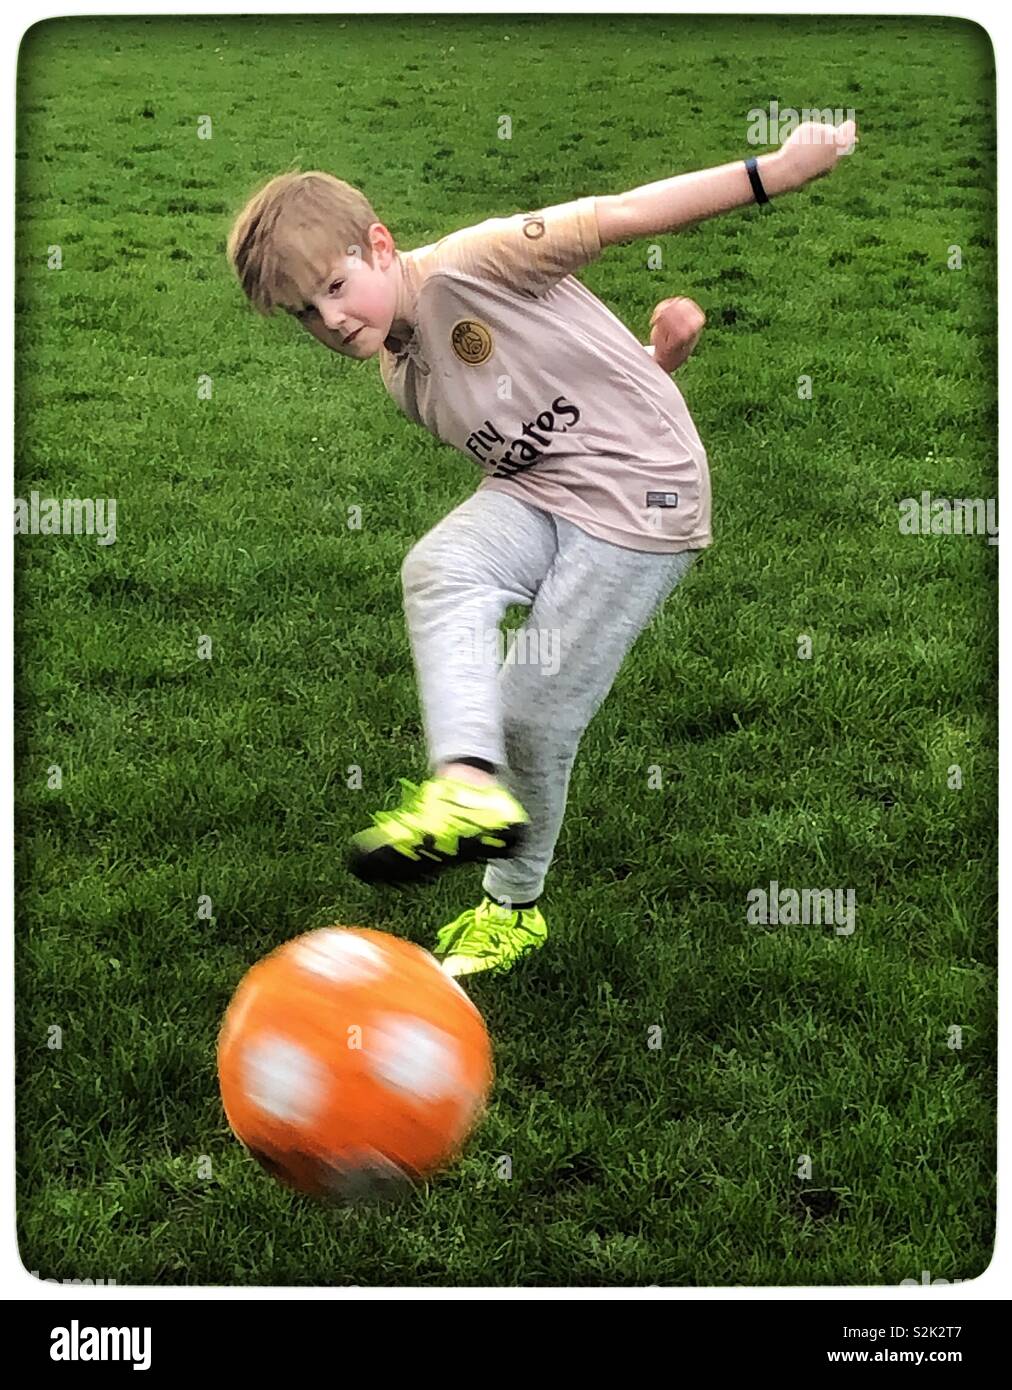 Boy kicking a football Banque D'Images